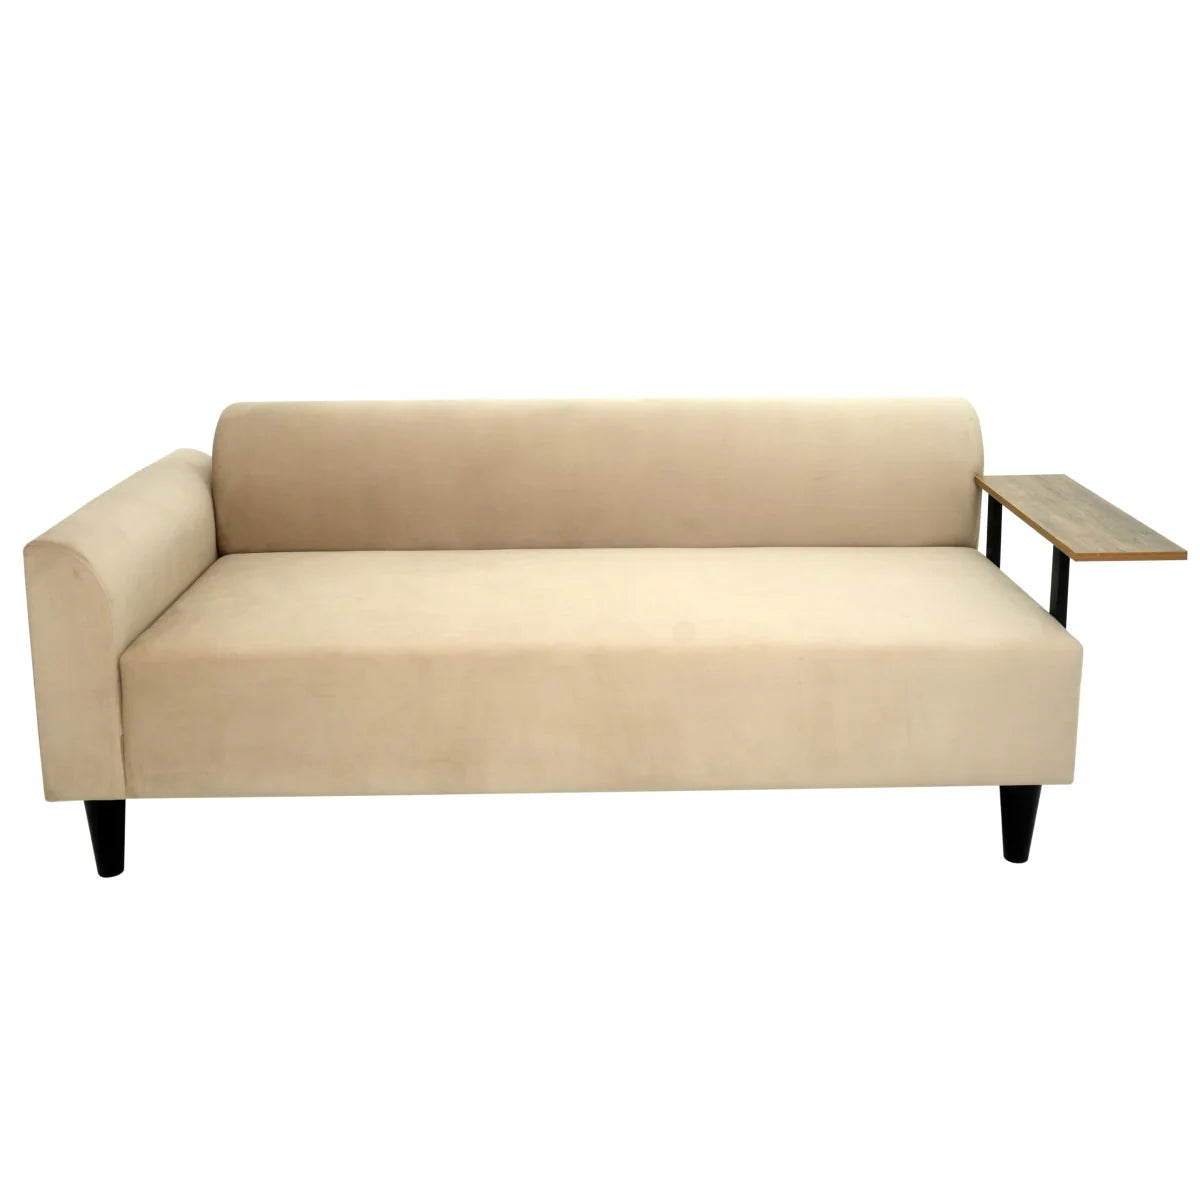 Osborne X Wooden Arm Sofa (805-3) 2+3 Seater Set Bundle